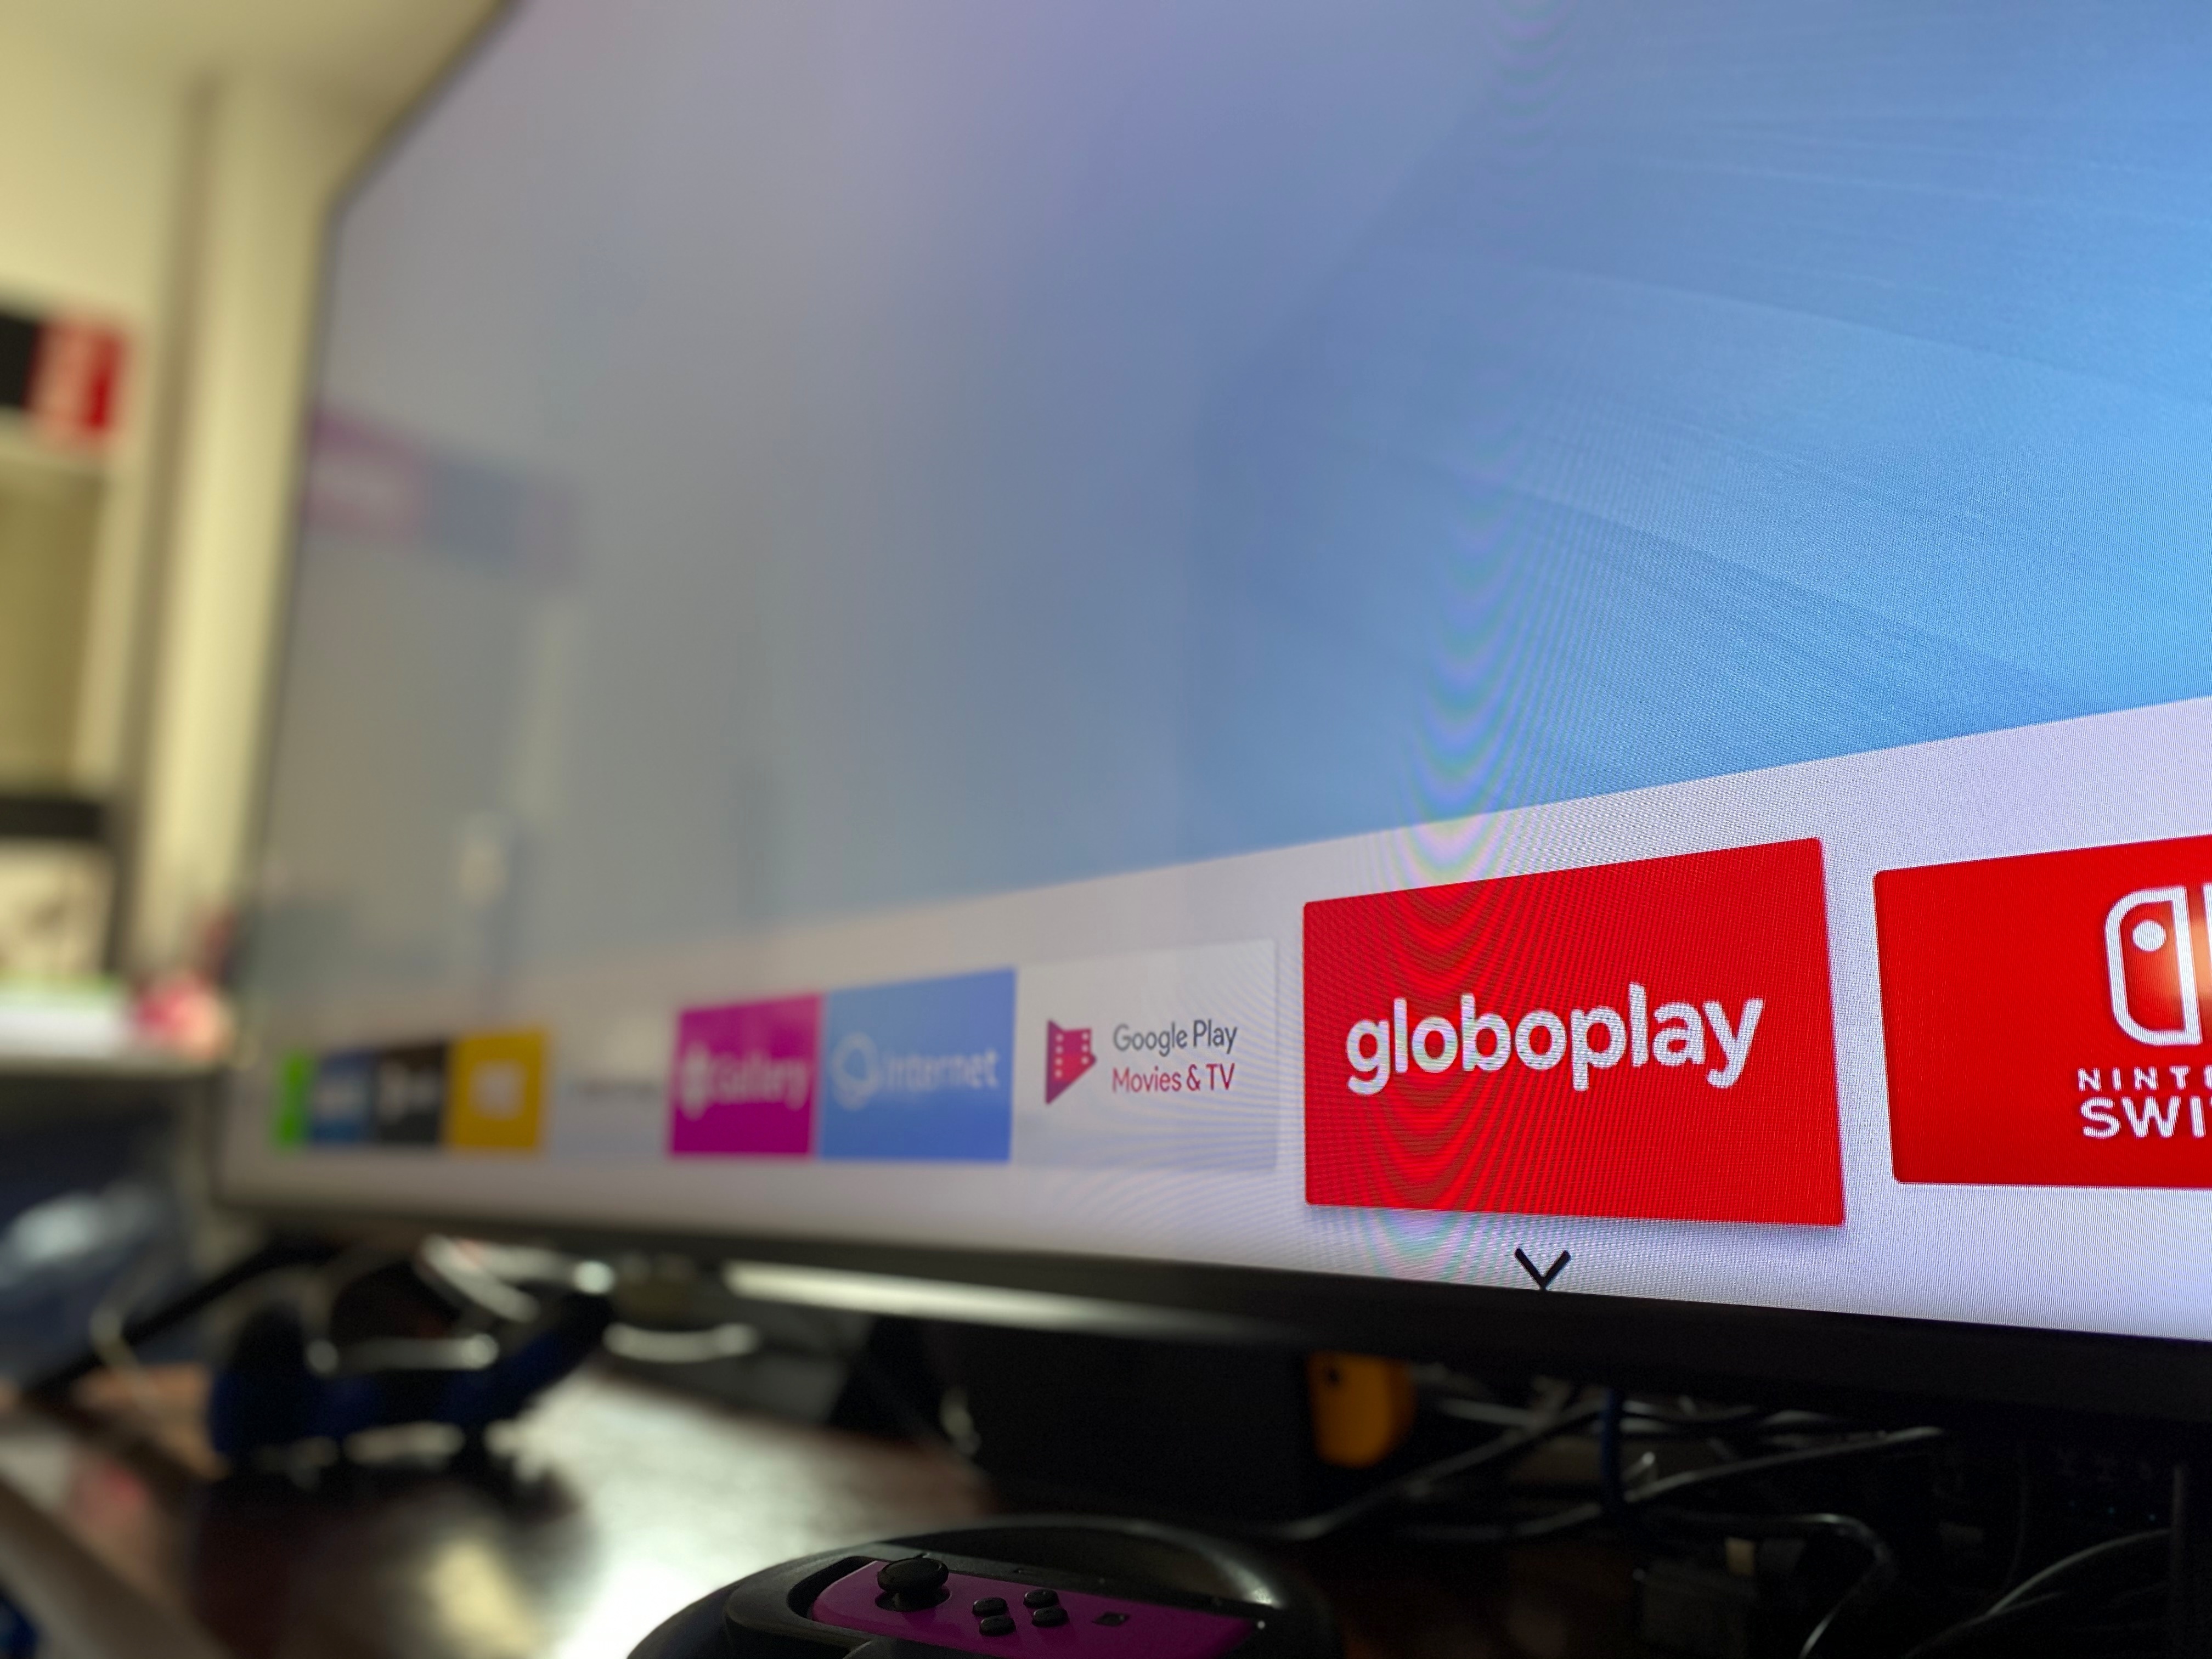 Paga plano globo play - Comunidade Google Play